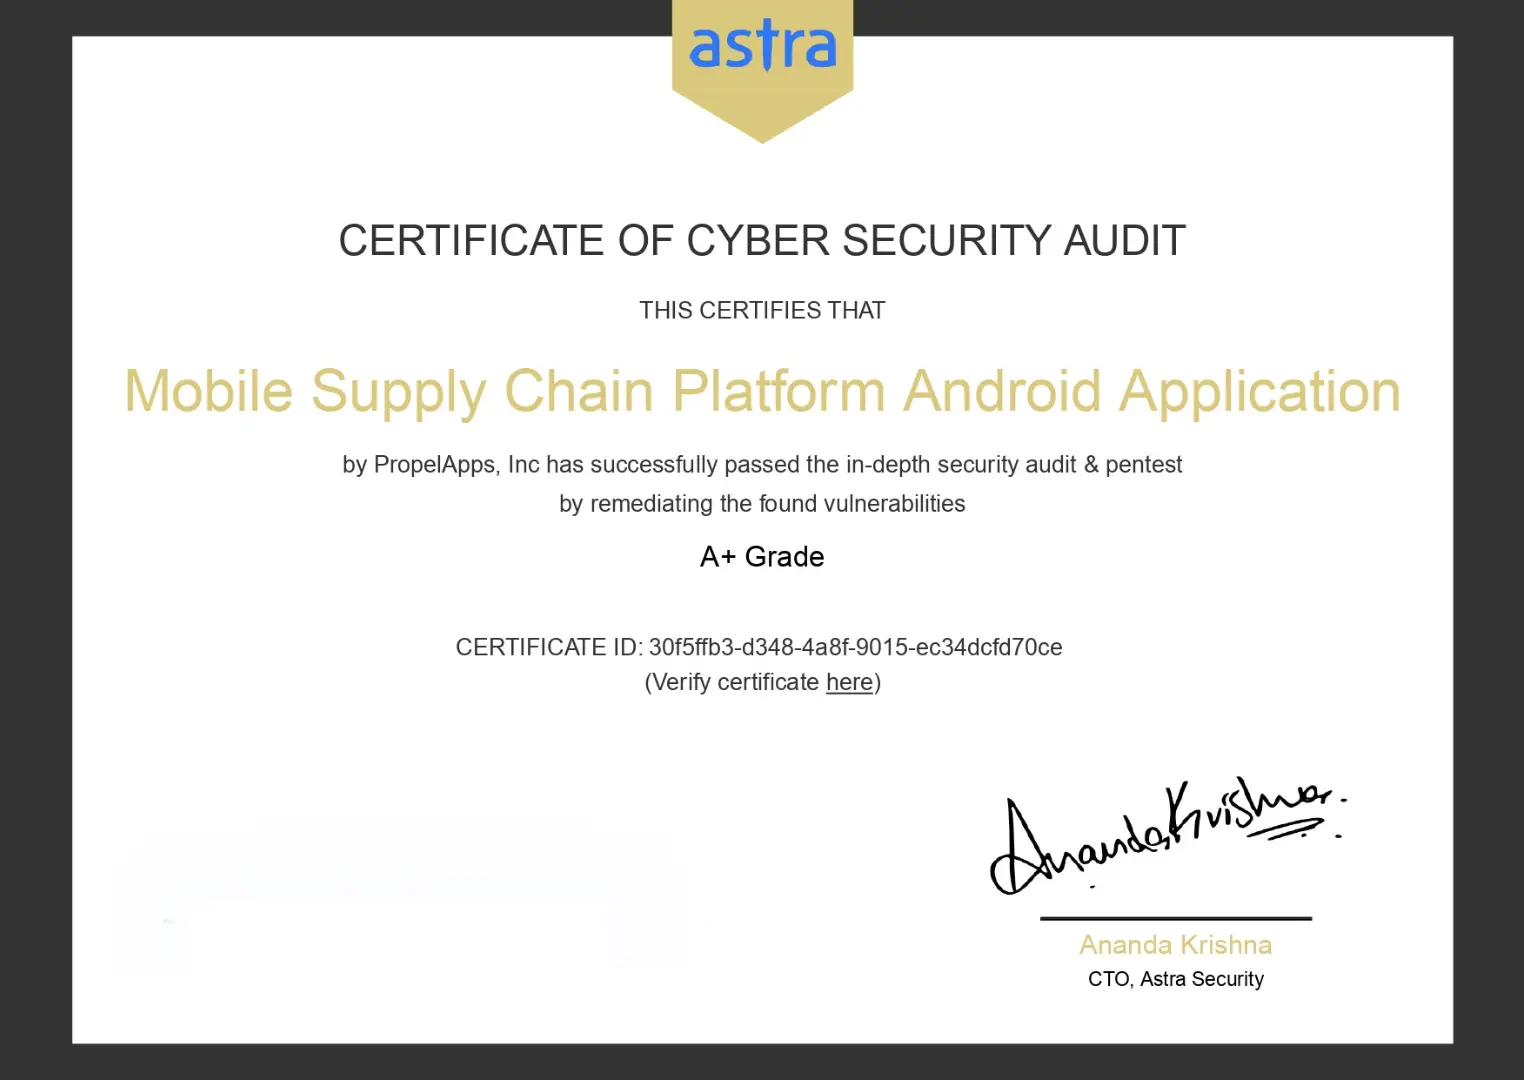 astra-certificate